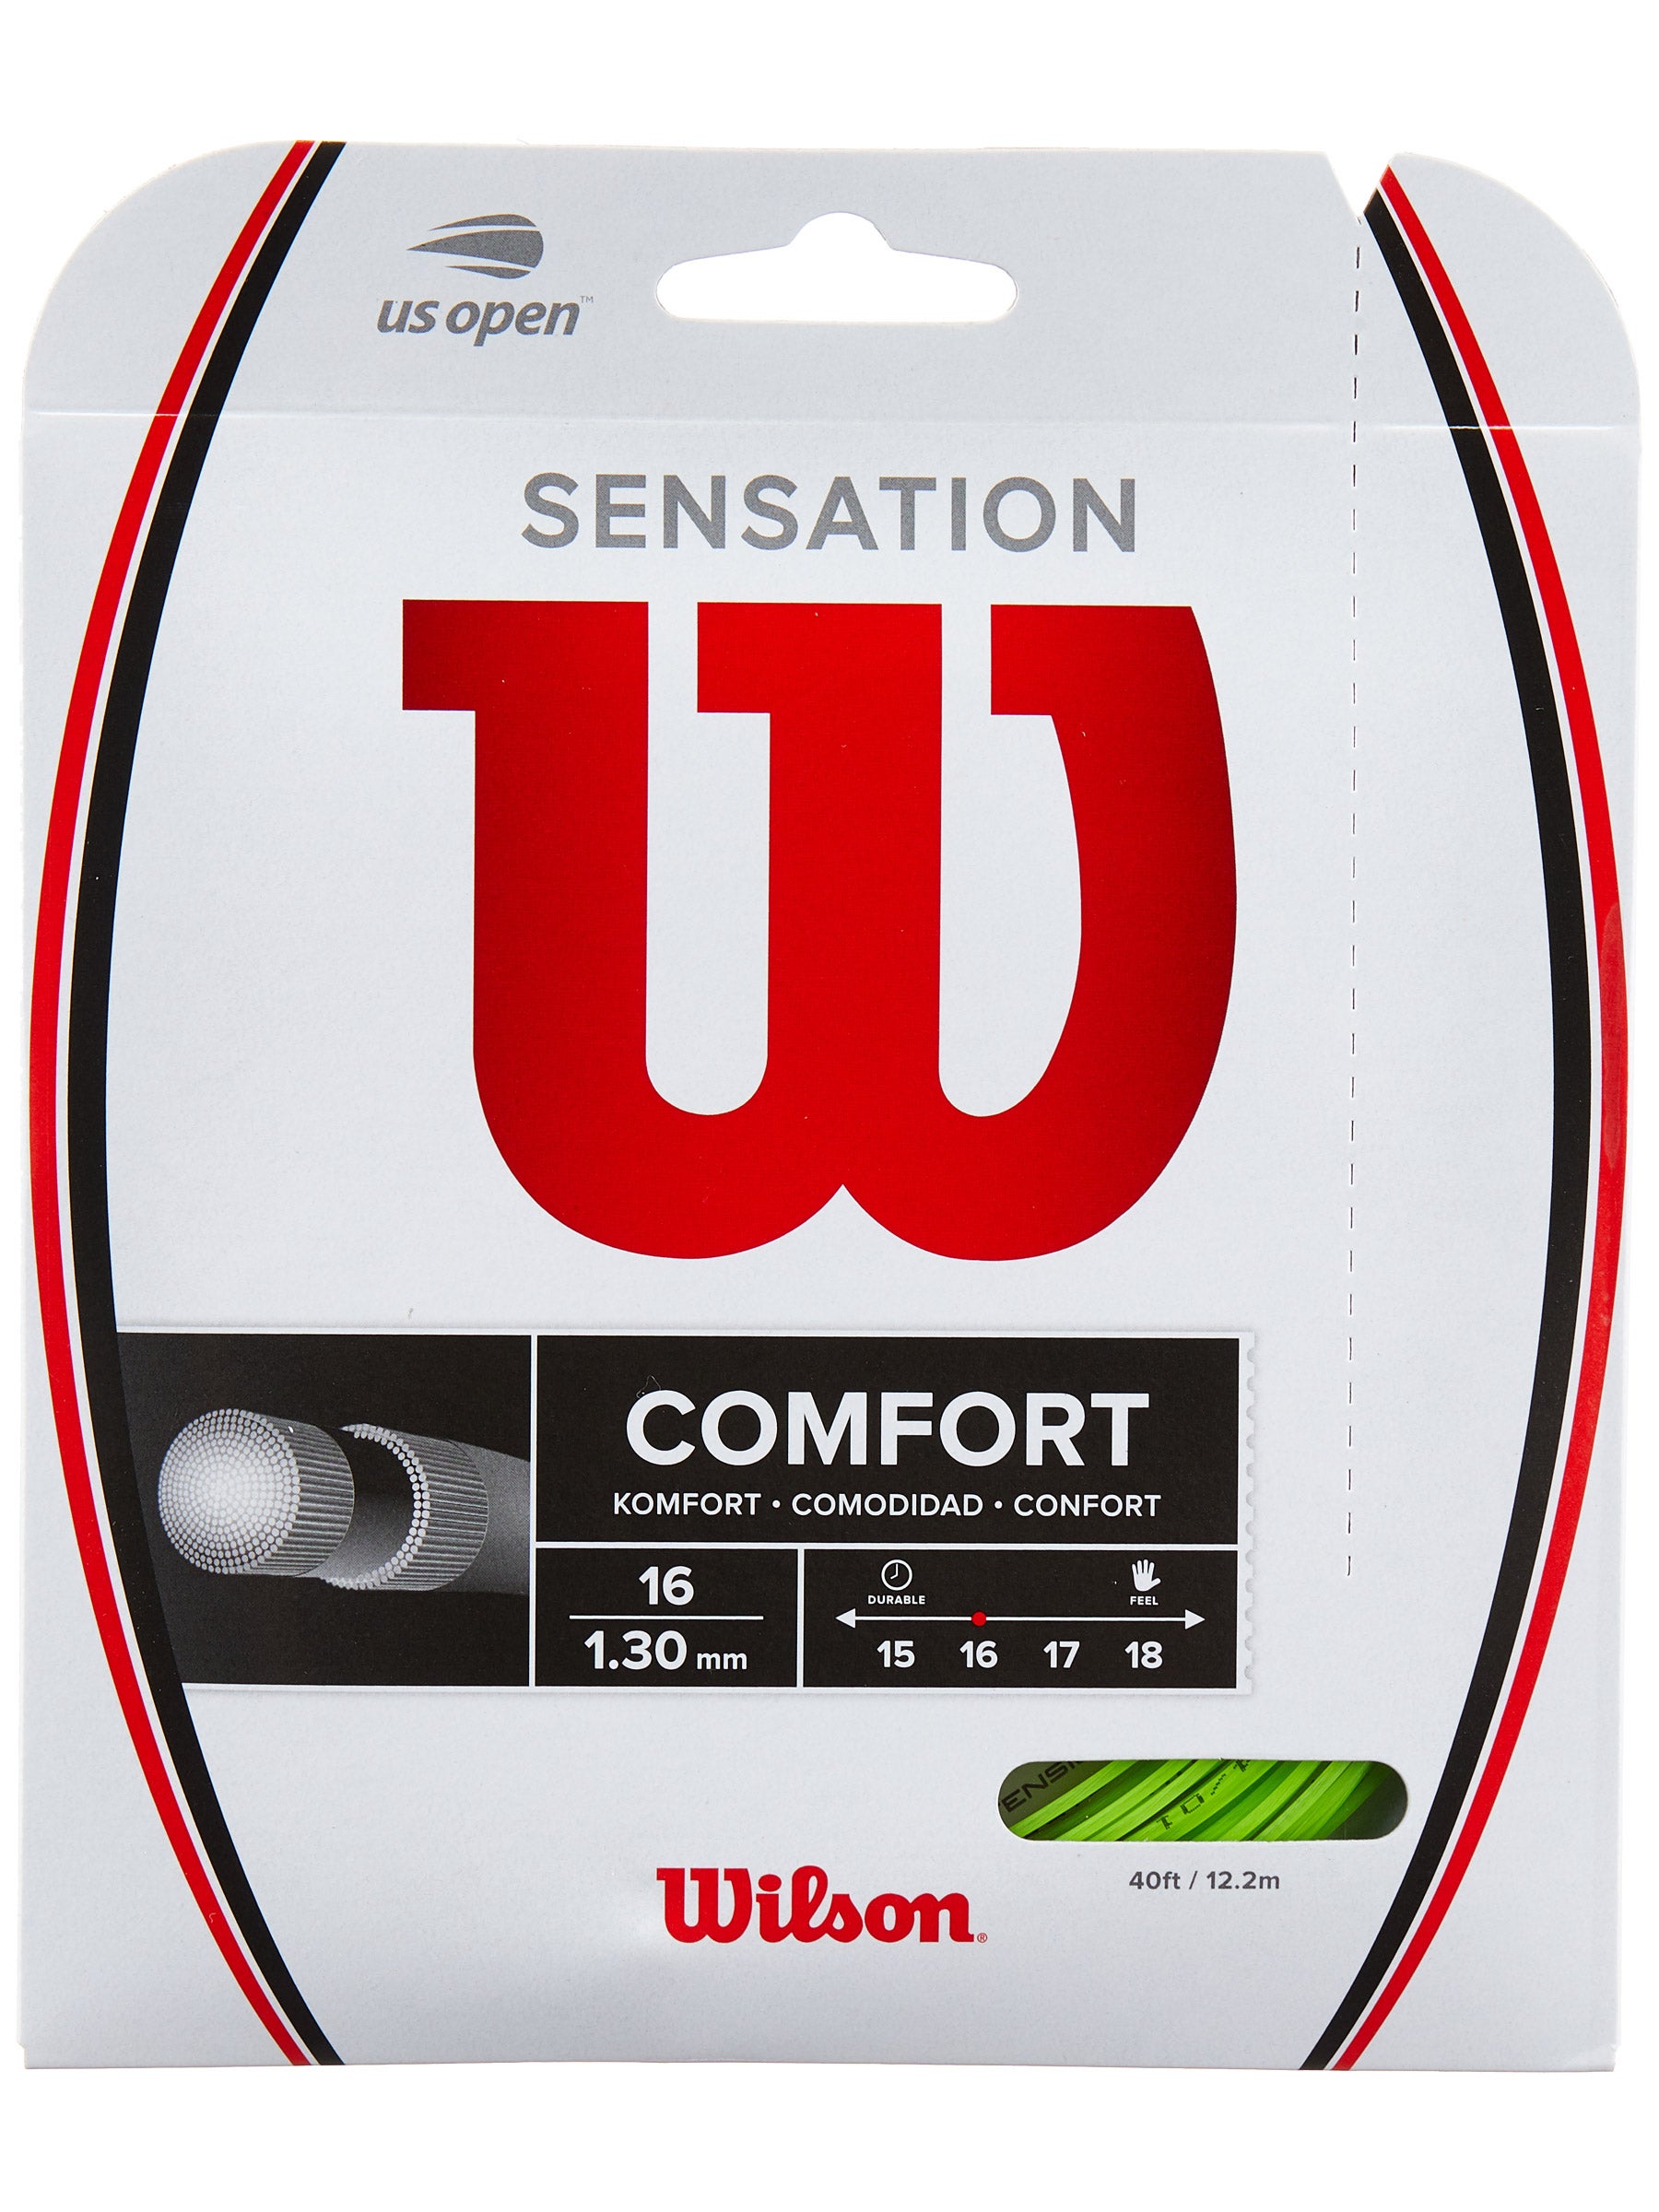 Wilson Sensation 16 1.30mm tennis string 40' 12.2m set 